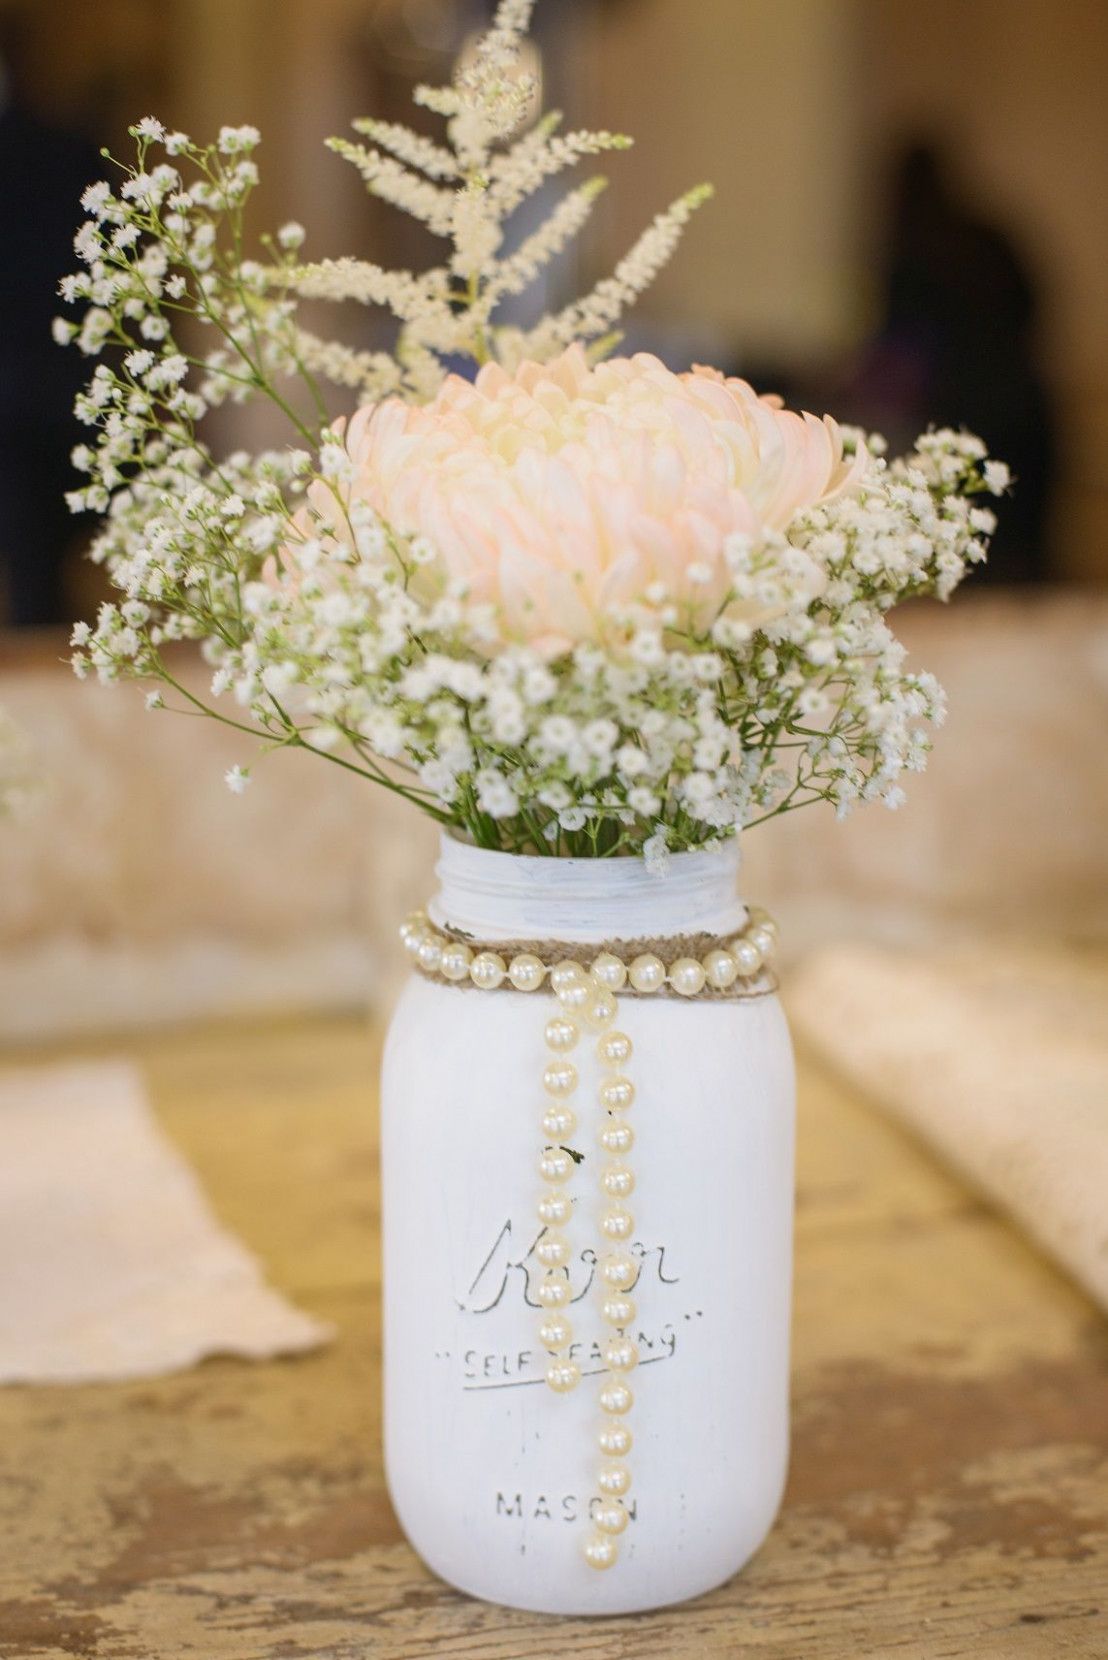 Creative Ways to Use Mason Jars at Your Wedding